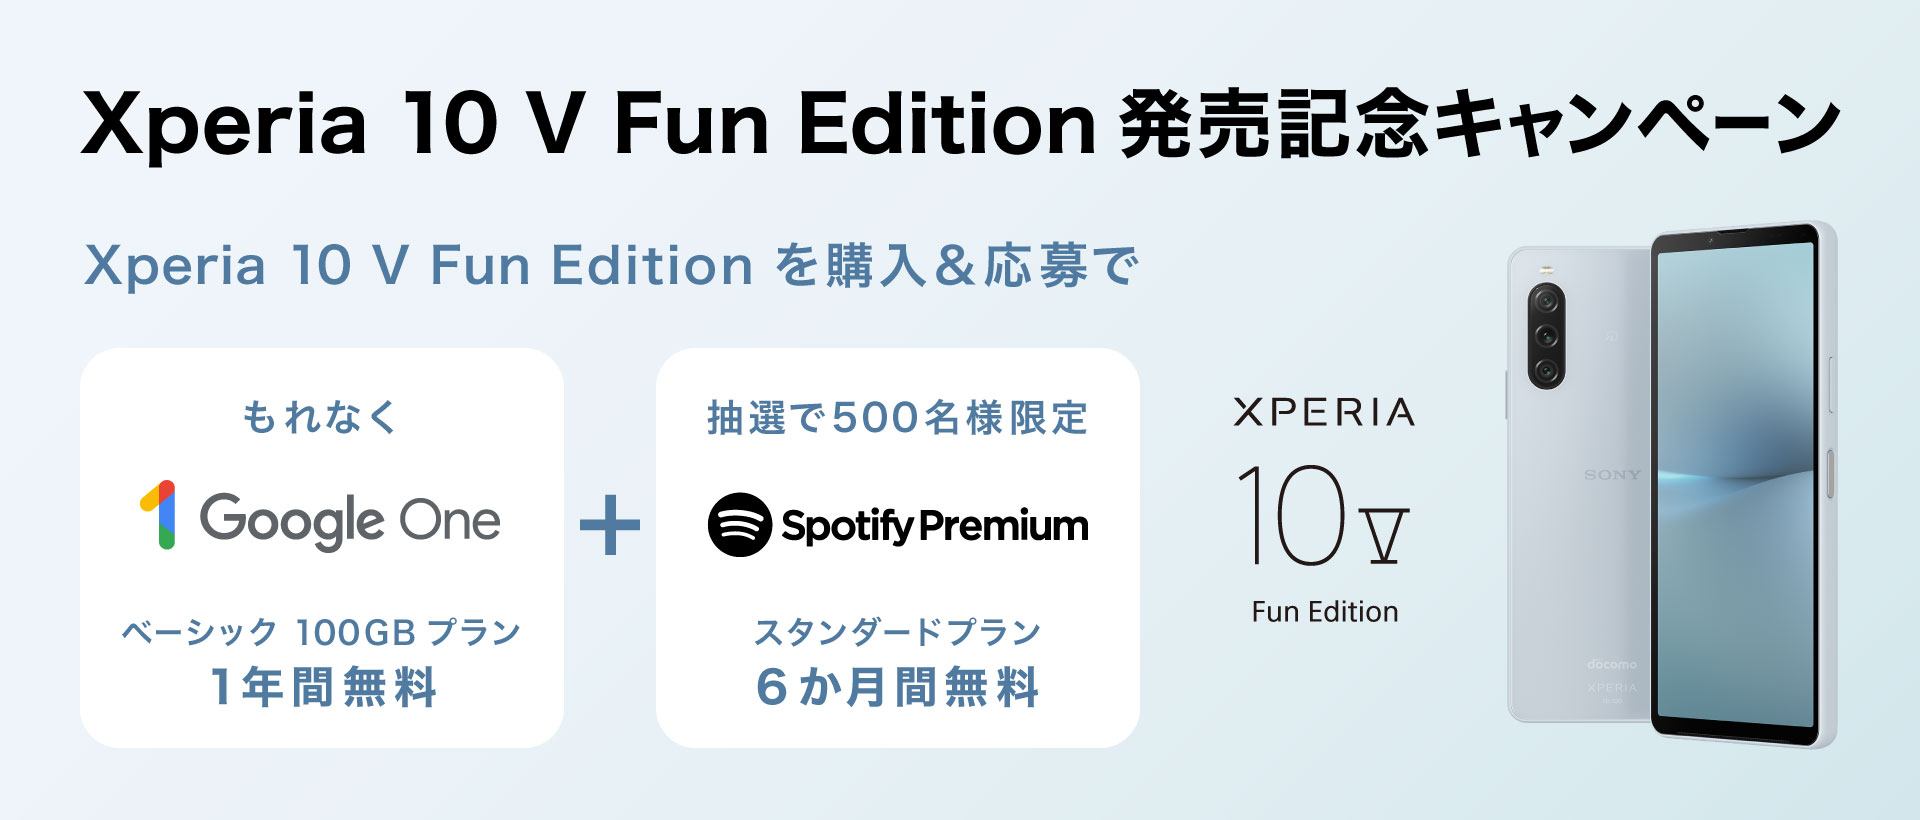 Xperia 10 V Fun Edition発売記念！Google One ＆ Spotify Premiumキャンペーン Xperia 10 V Fun Edition を購入＆応募で もれなく Google One ベーシック100GBプラン 1年間無料 ＋ 抽選で500名様限定 Spotify Premium スタンダードプラン 6ヶ月無料